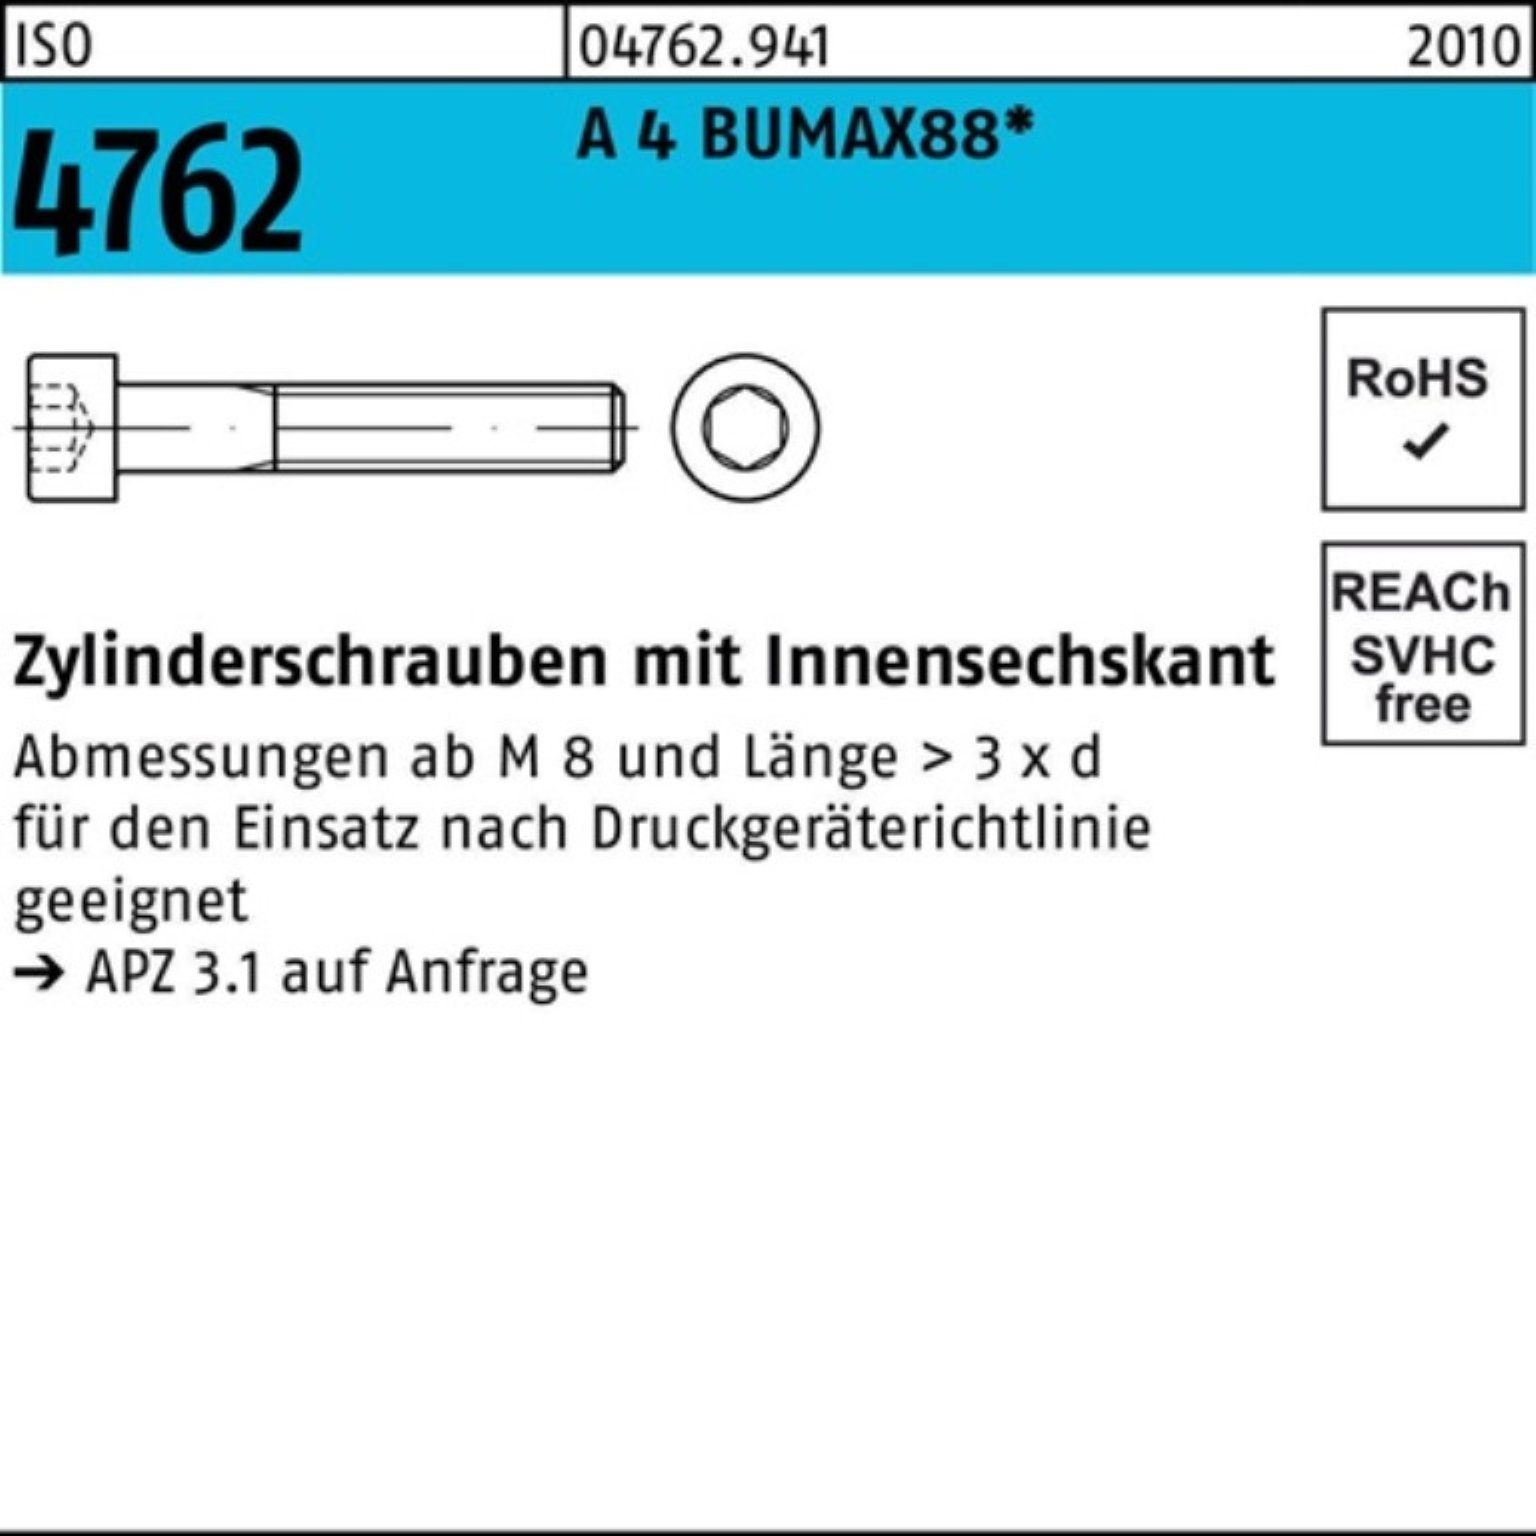 A Bufab 16 100er ISO 50 M8x Pack BUMAX88 4762 Zylinderschraube Zylinderschraube Innen-6kt S 4